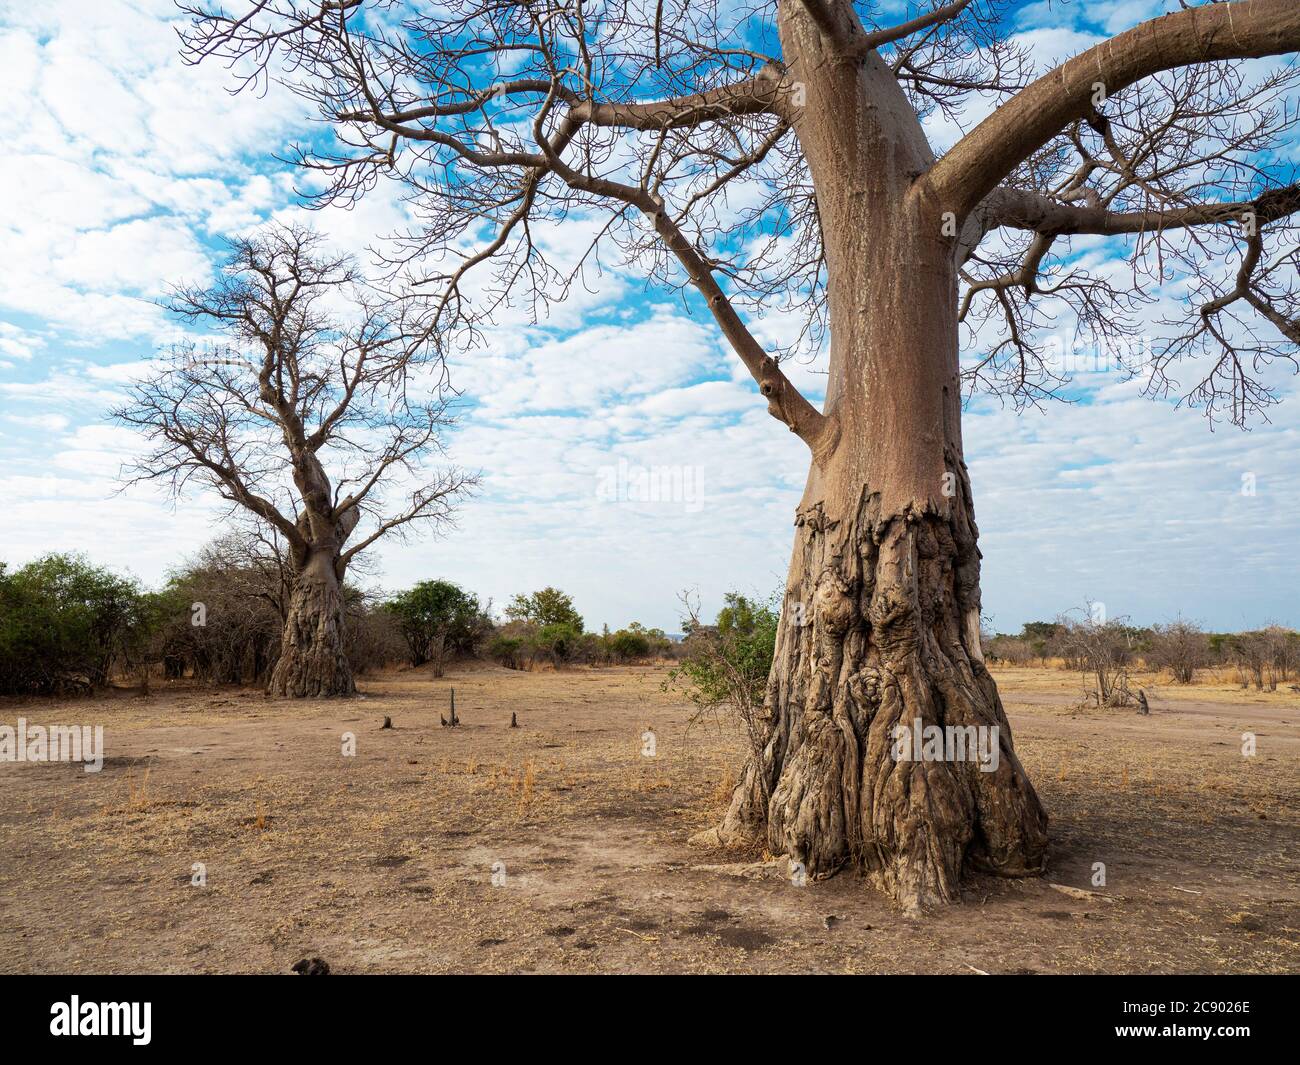 A very large baobab tree, Adansonia digitata, showing elephant foraging damage in South Luangwa National Park, Zambia. Stock Photo